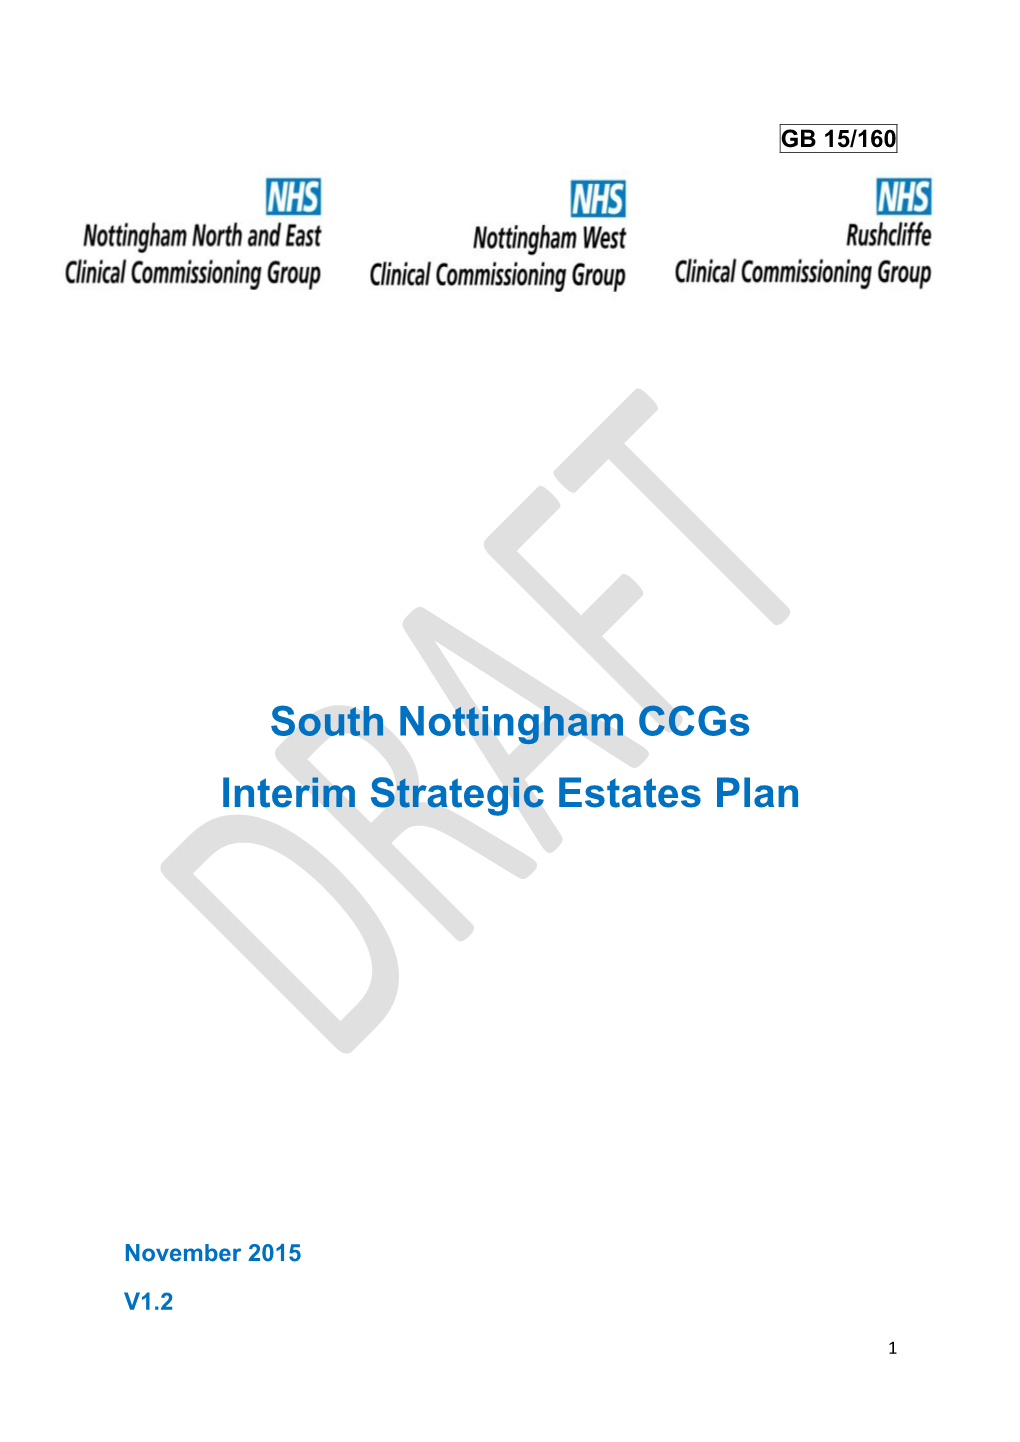 South Nottingham Ccgs Interim Strategic Estates Plan